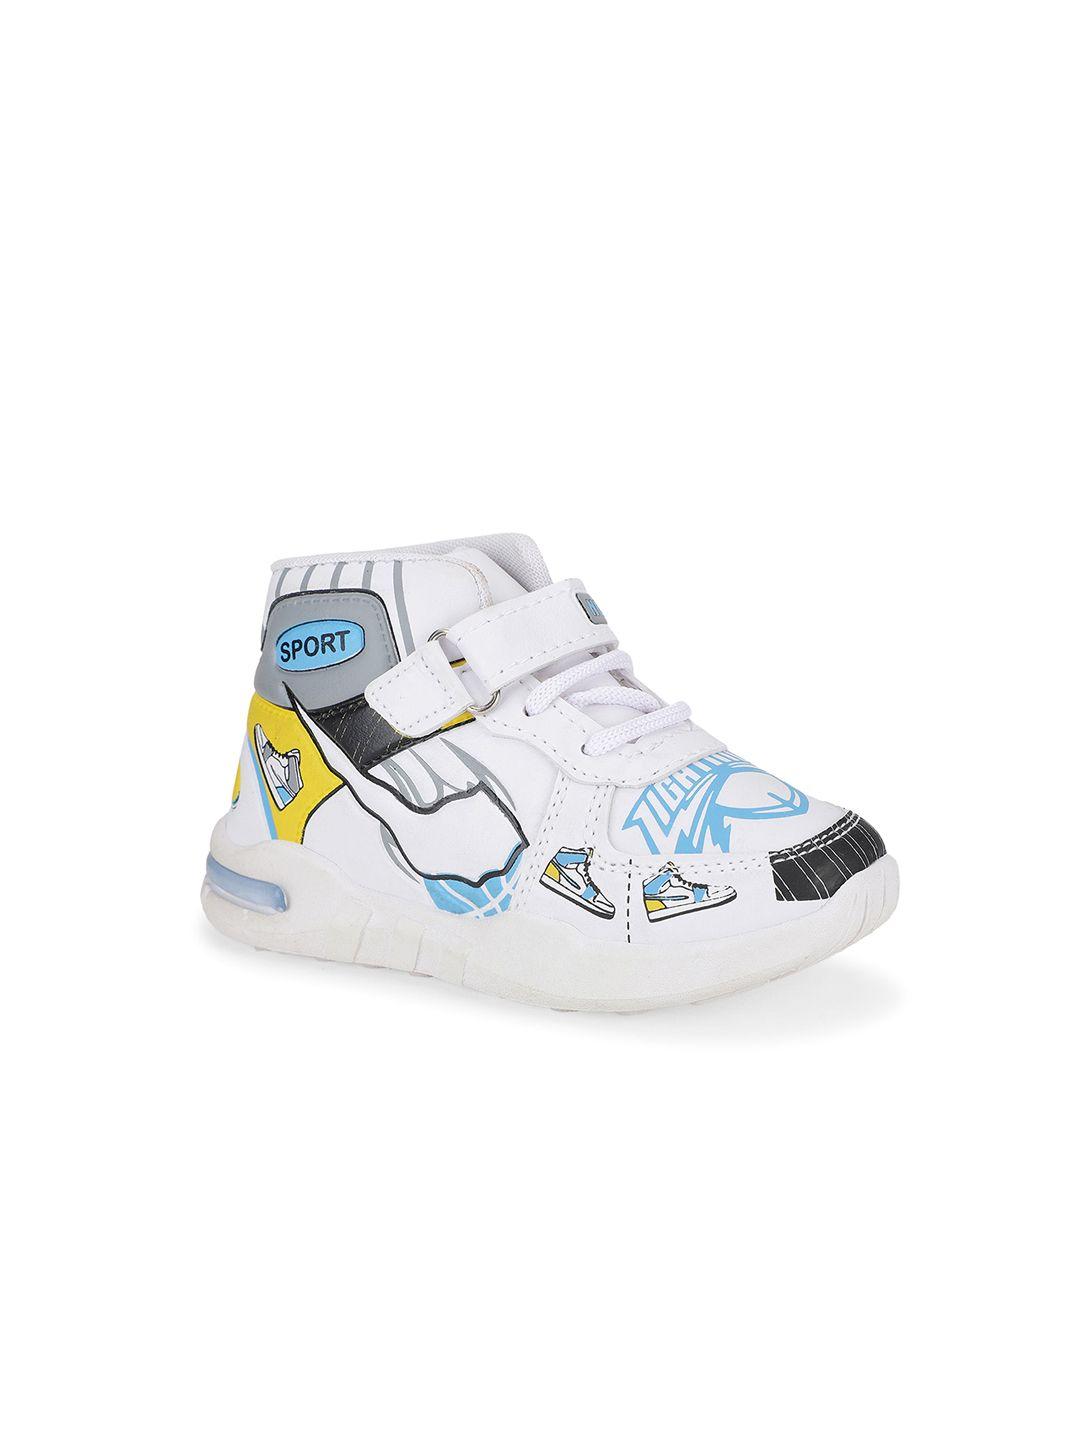 neobaby unisex kids white printed high-top sneakers